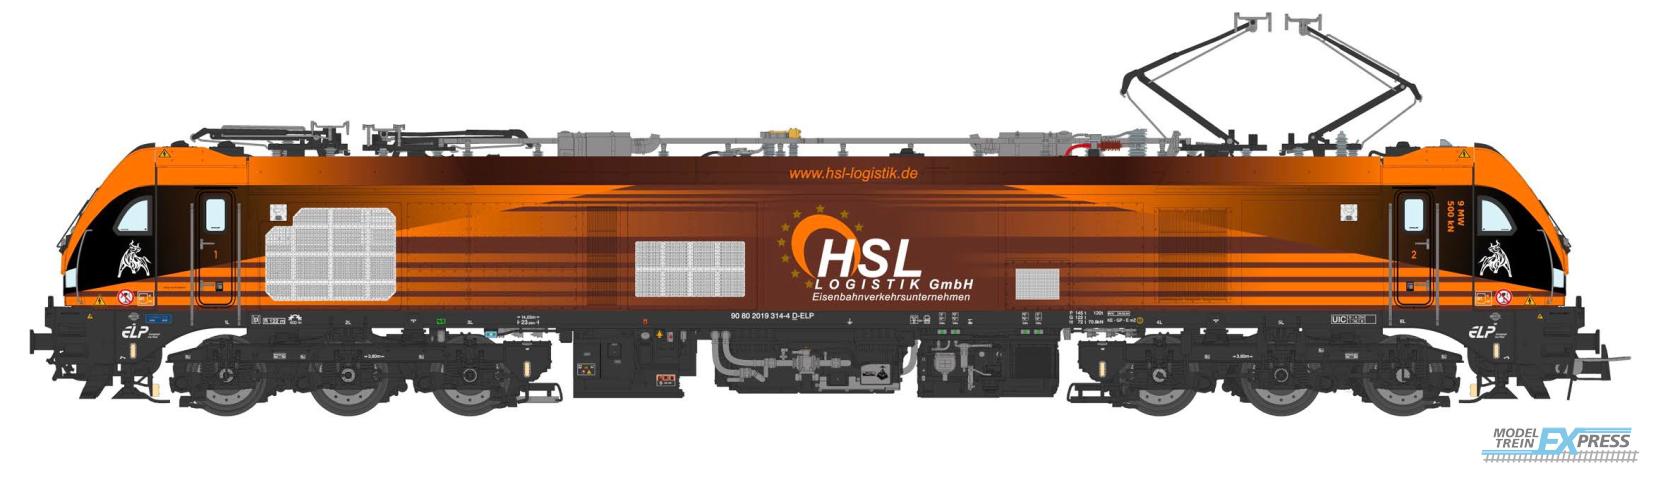 Sudexpress S0193148 Euro 9000 locomotive 2019 314-4 HSL Logistics GmbH, AC Sound + Servos (Pantos)